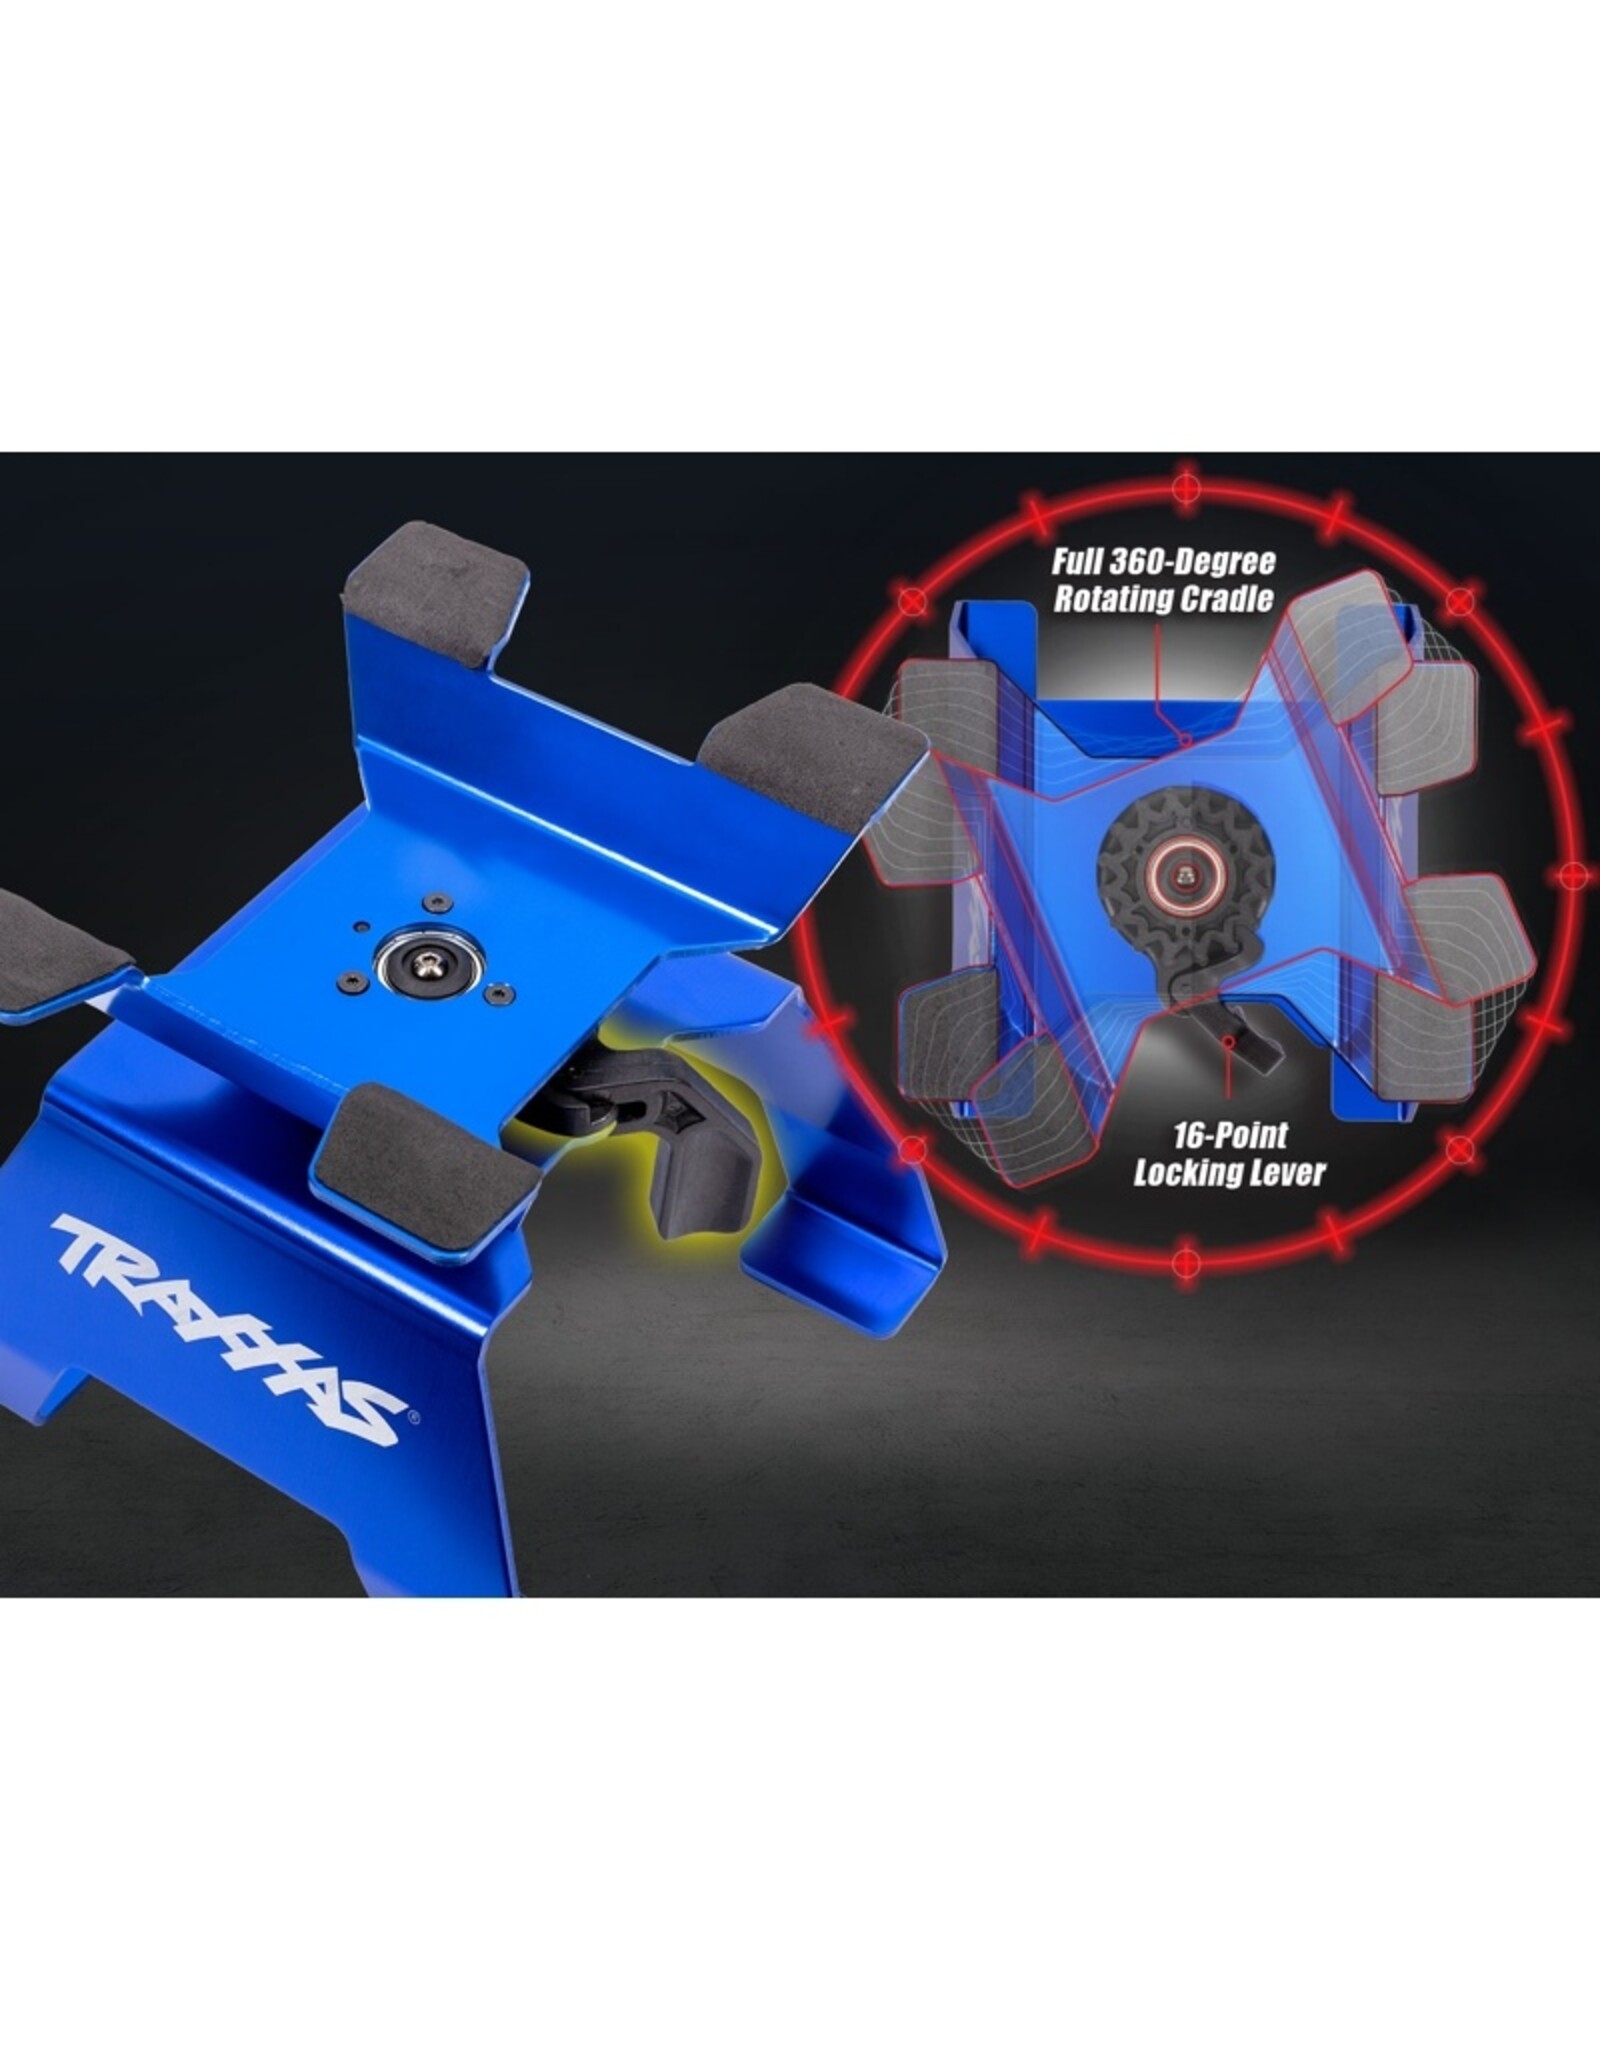 Traxxas TRA8796-BLUE RC CAR/TRUCK STAND BLUE